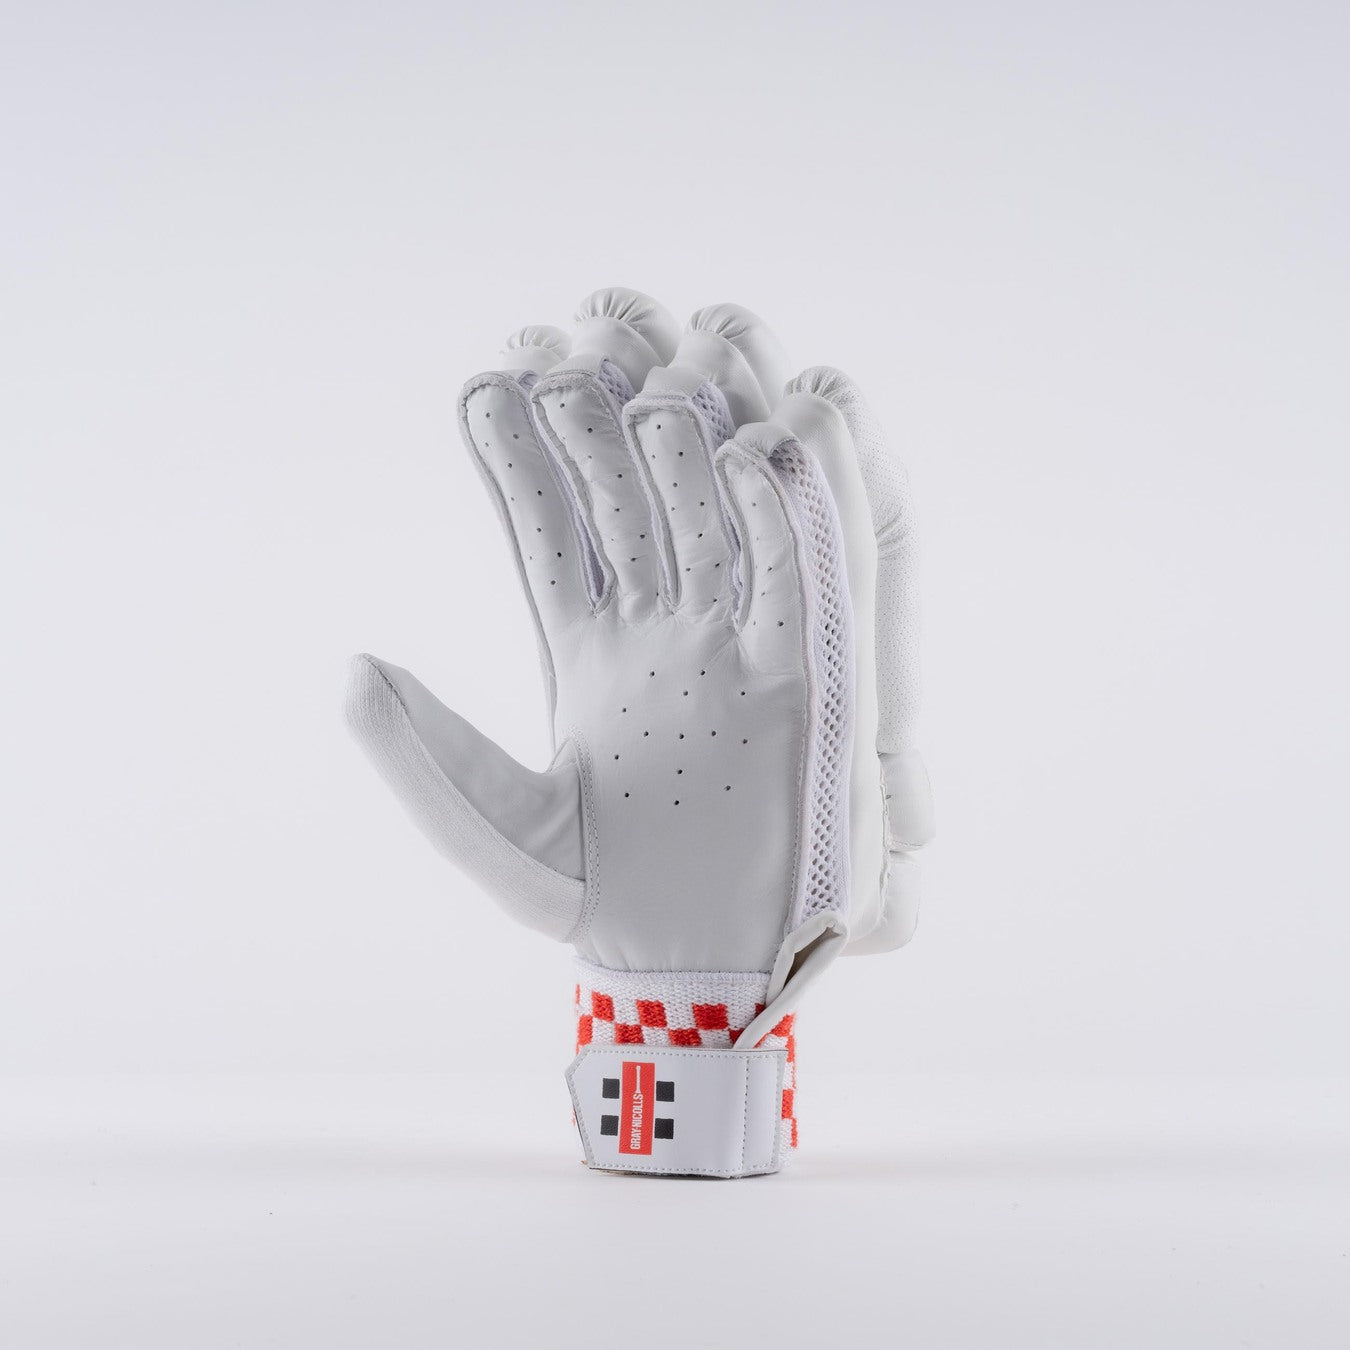 CGGB22Batting Gloves Glove GN100 Top Hand, Palm